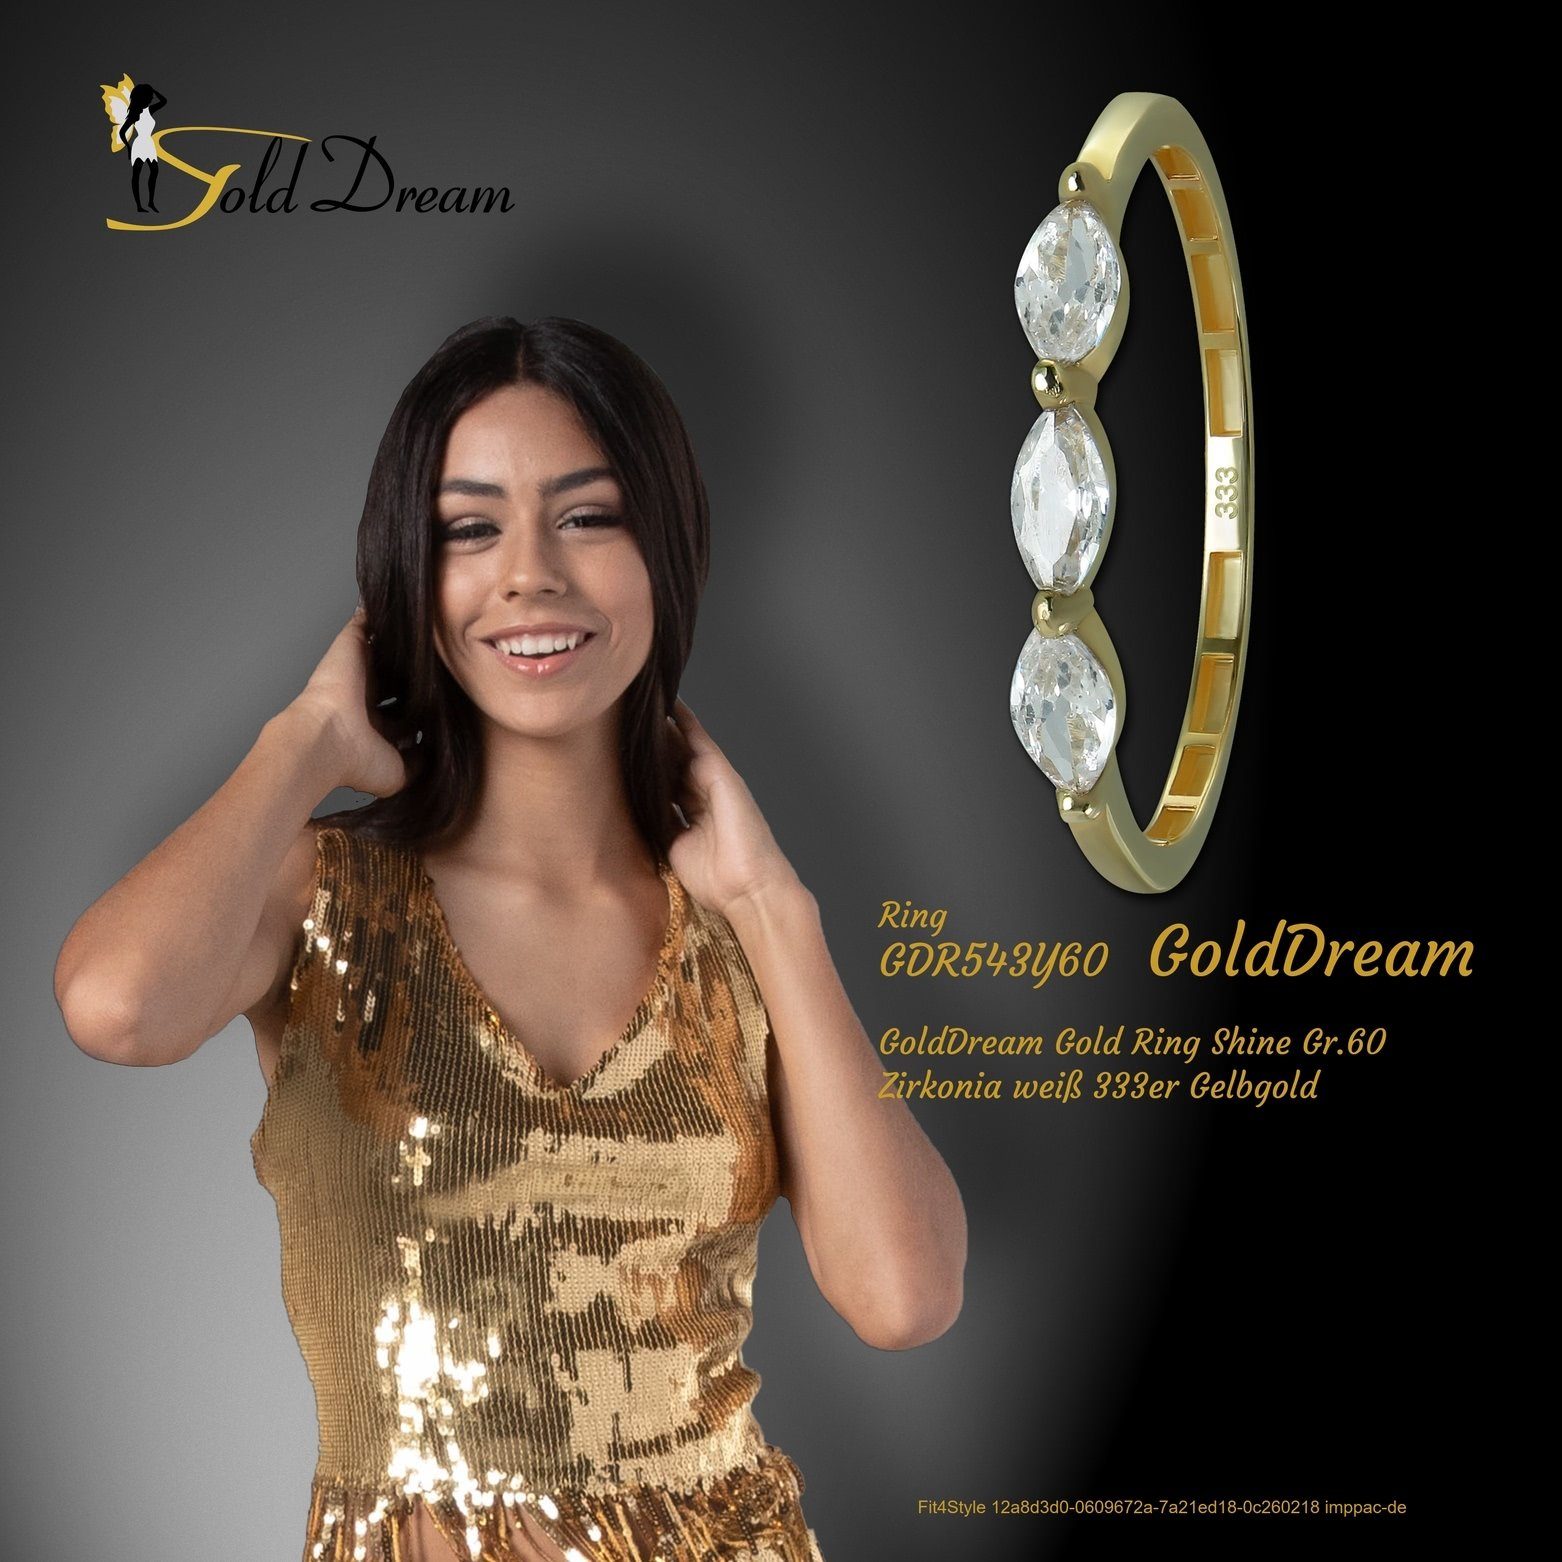 333 Karat, Gelbgold Farbe: weiß Gr.60 Ring Damen Zirkonia Goldring (Fingerring), GoldDream - Gold gold, Shine Ring GoldDream Shine 8